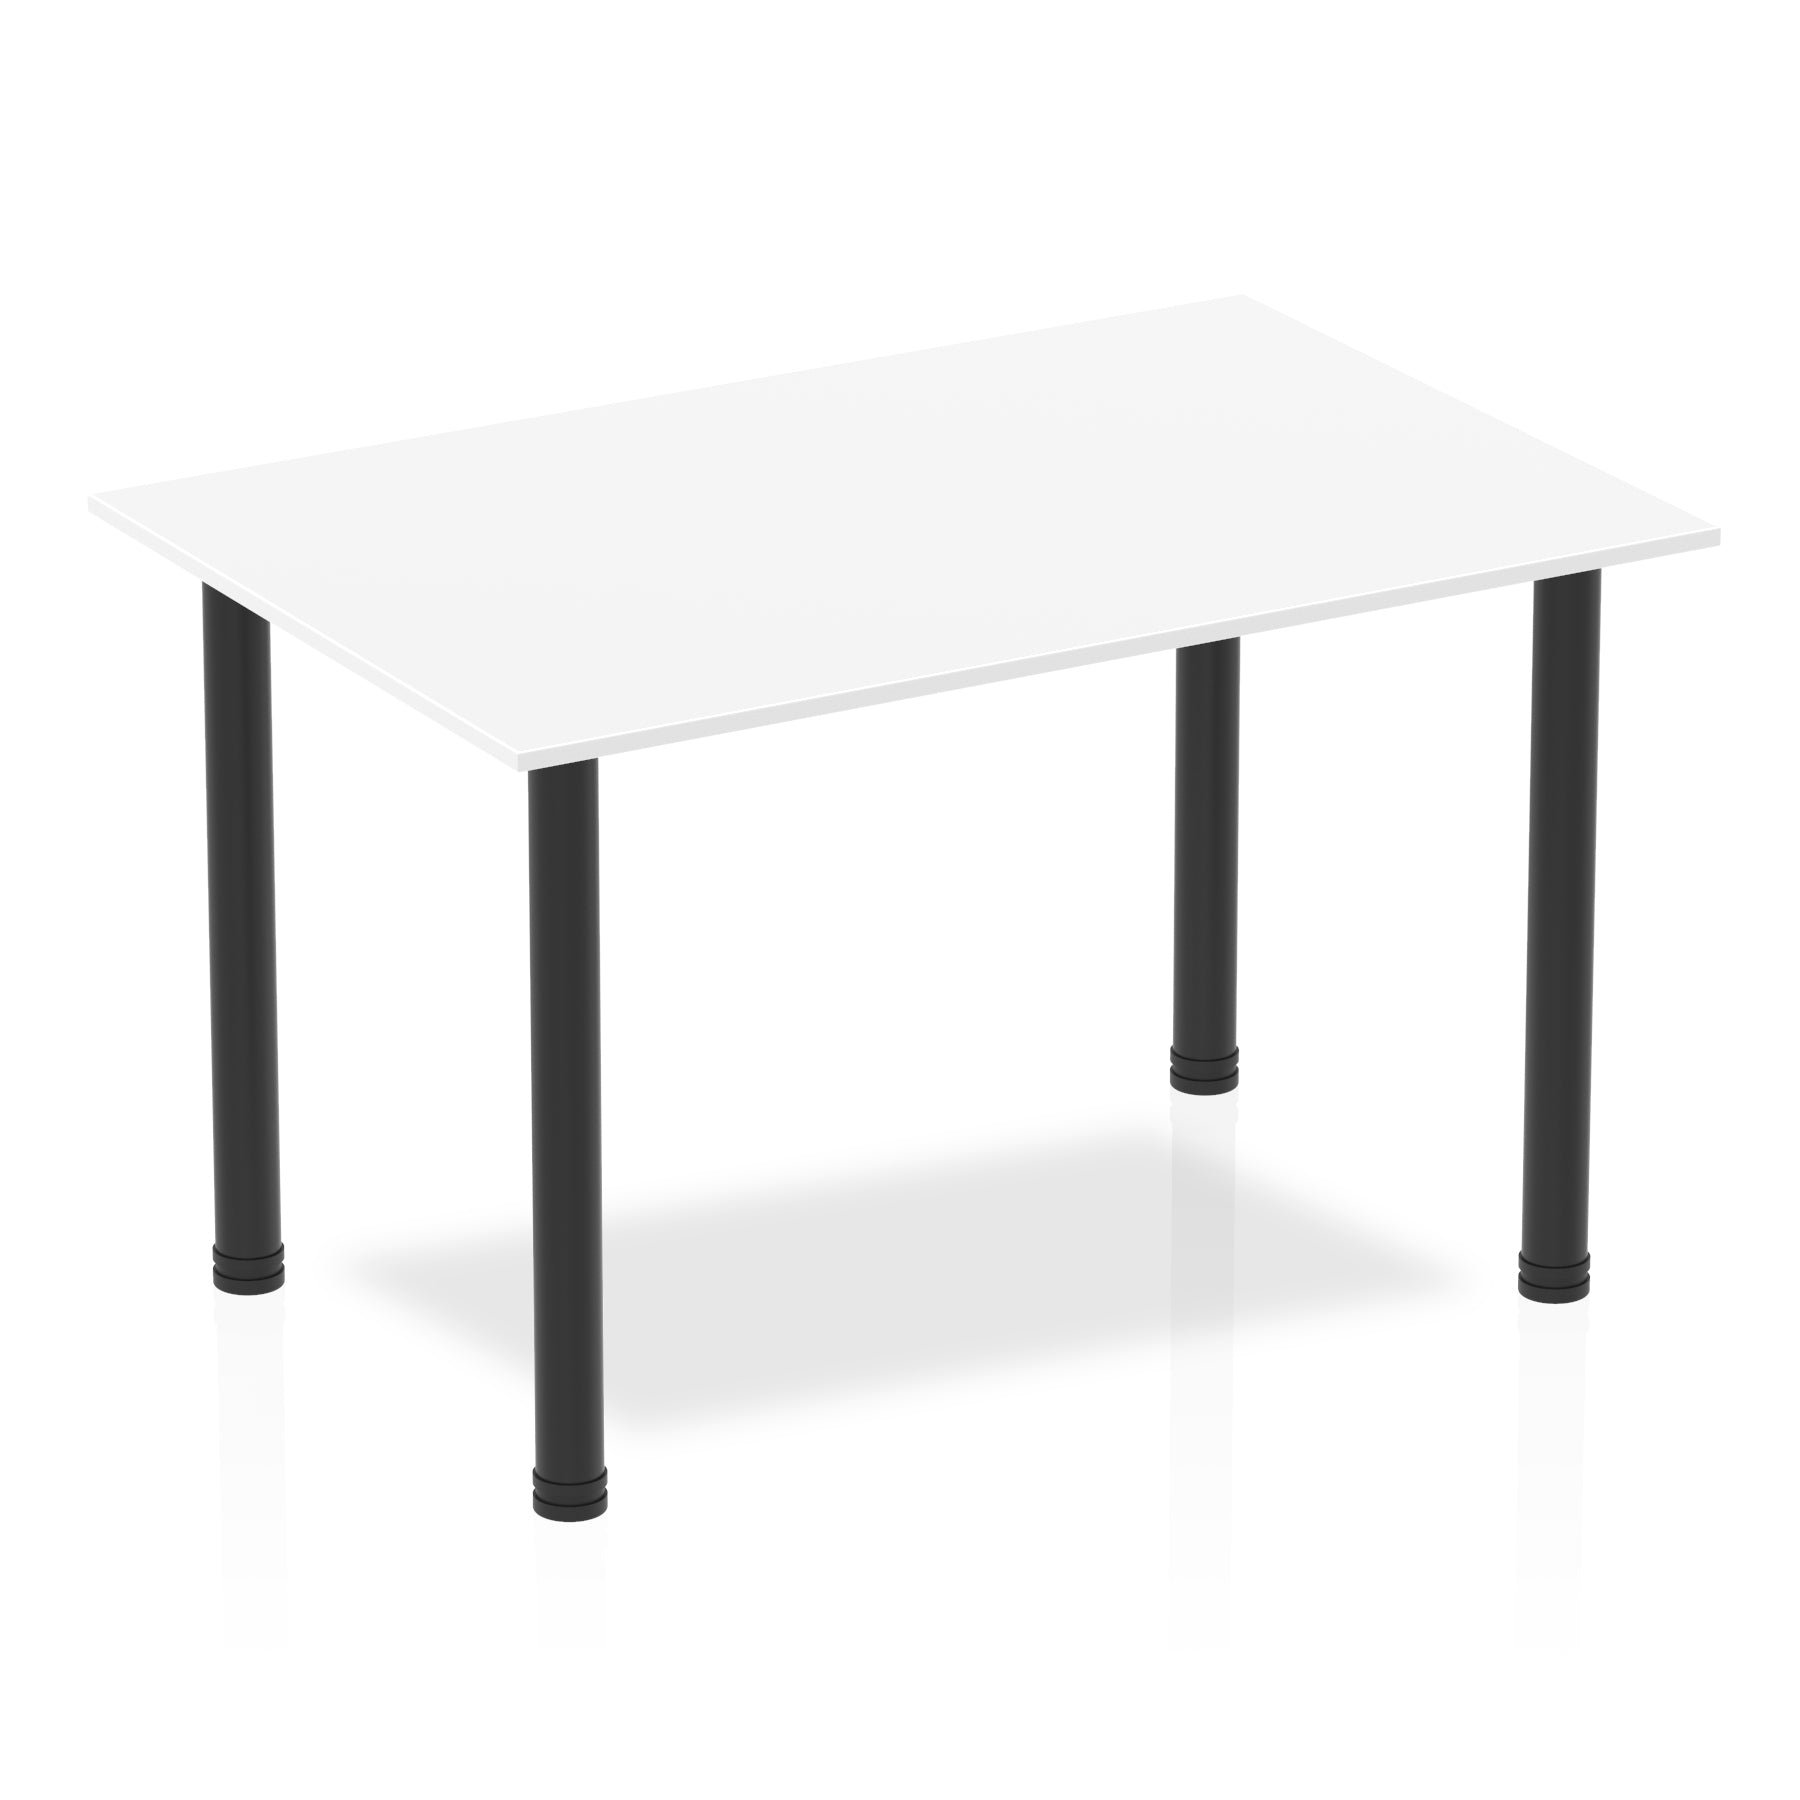 Impulse 1200mm Straight Post Leg Table - Rectangular MFC Desk, Self-Assembly, 5-Year Guarantee, Multiple Frame Colors, 1200x800x740mm